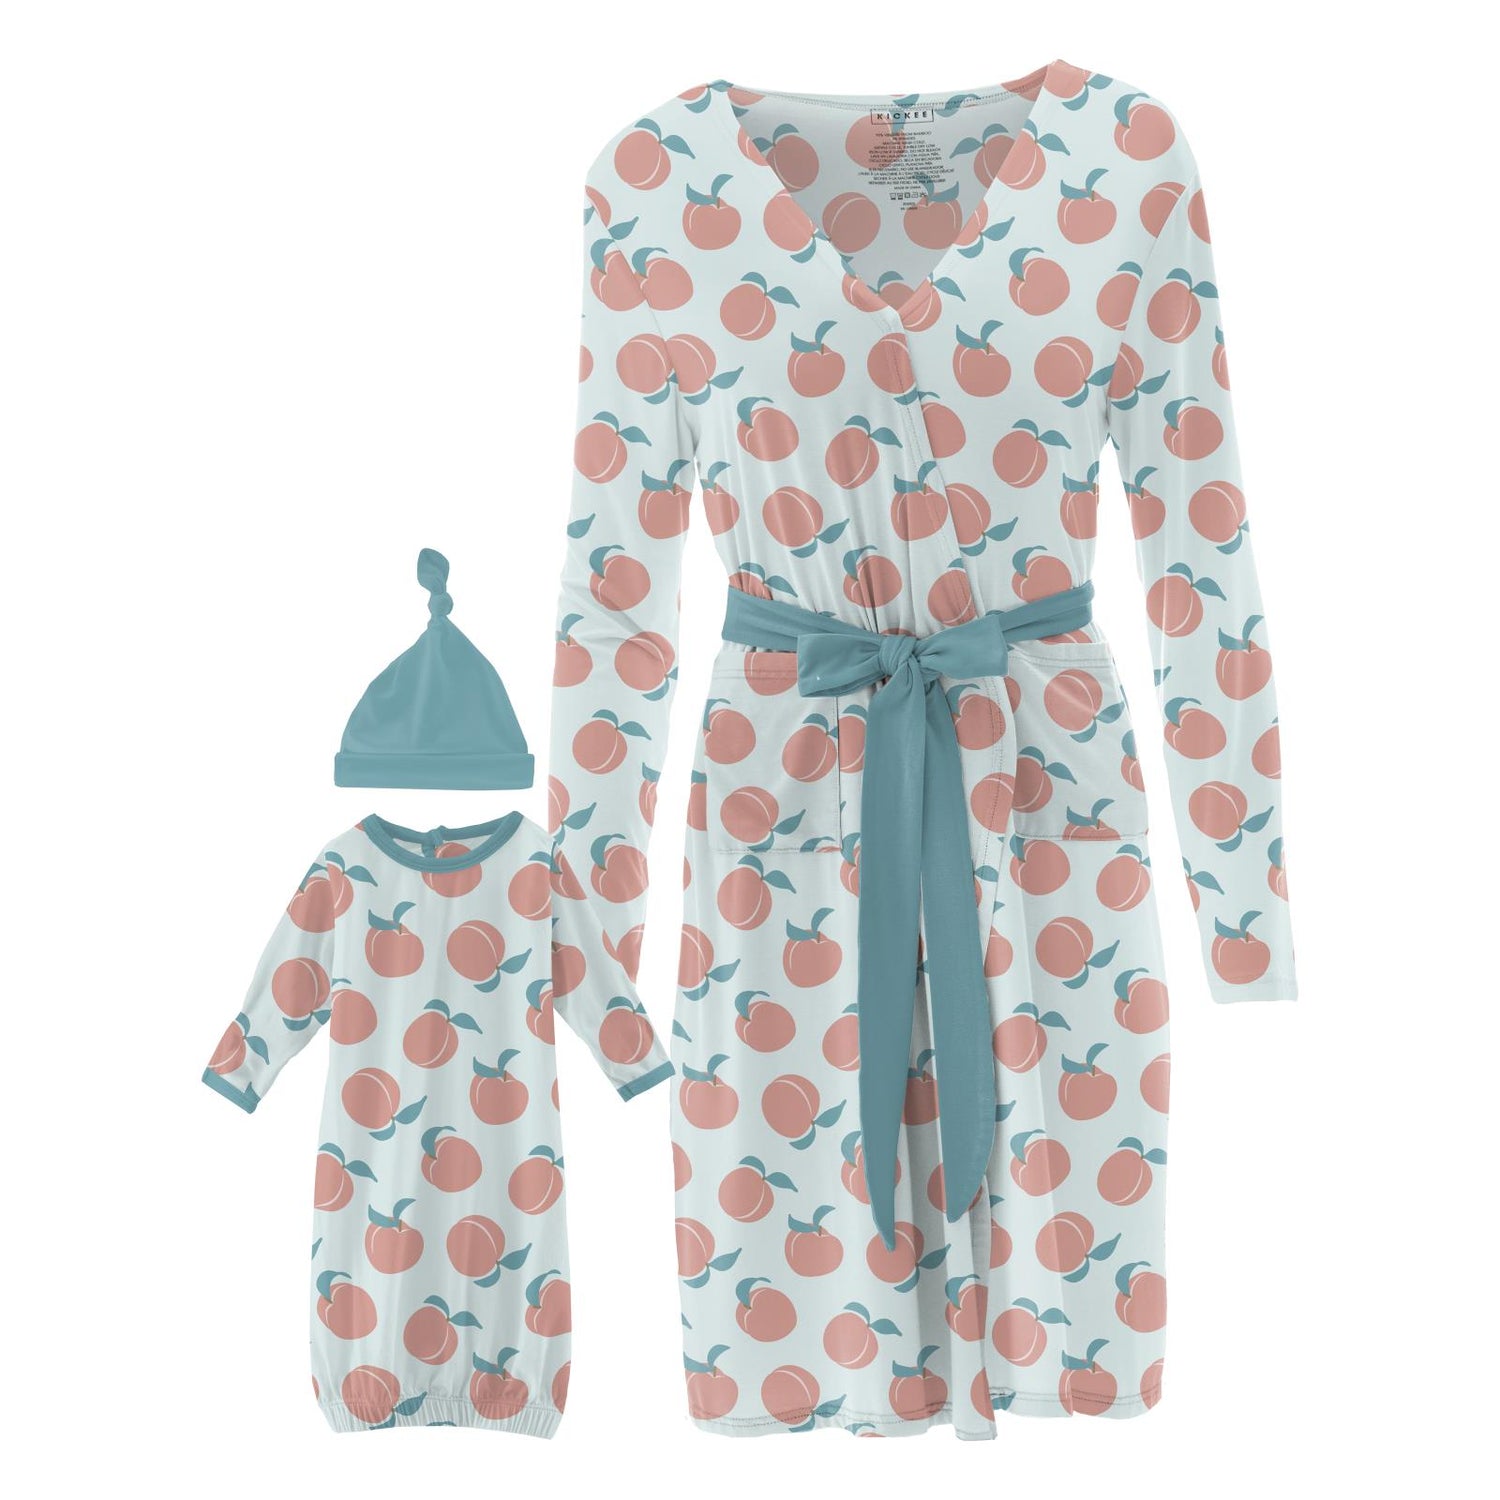 Women's Maternity/Nursing Robe & Layette Gown Set in Fresh Air Peaches